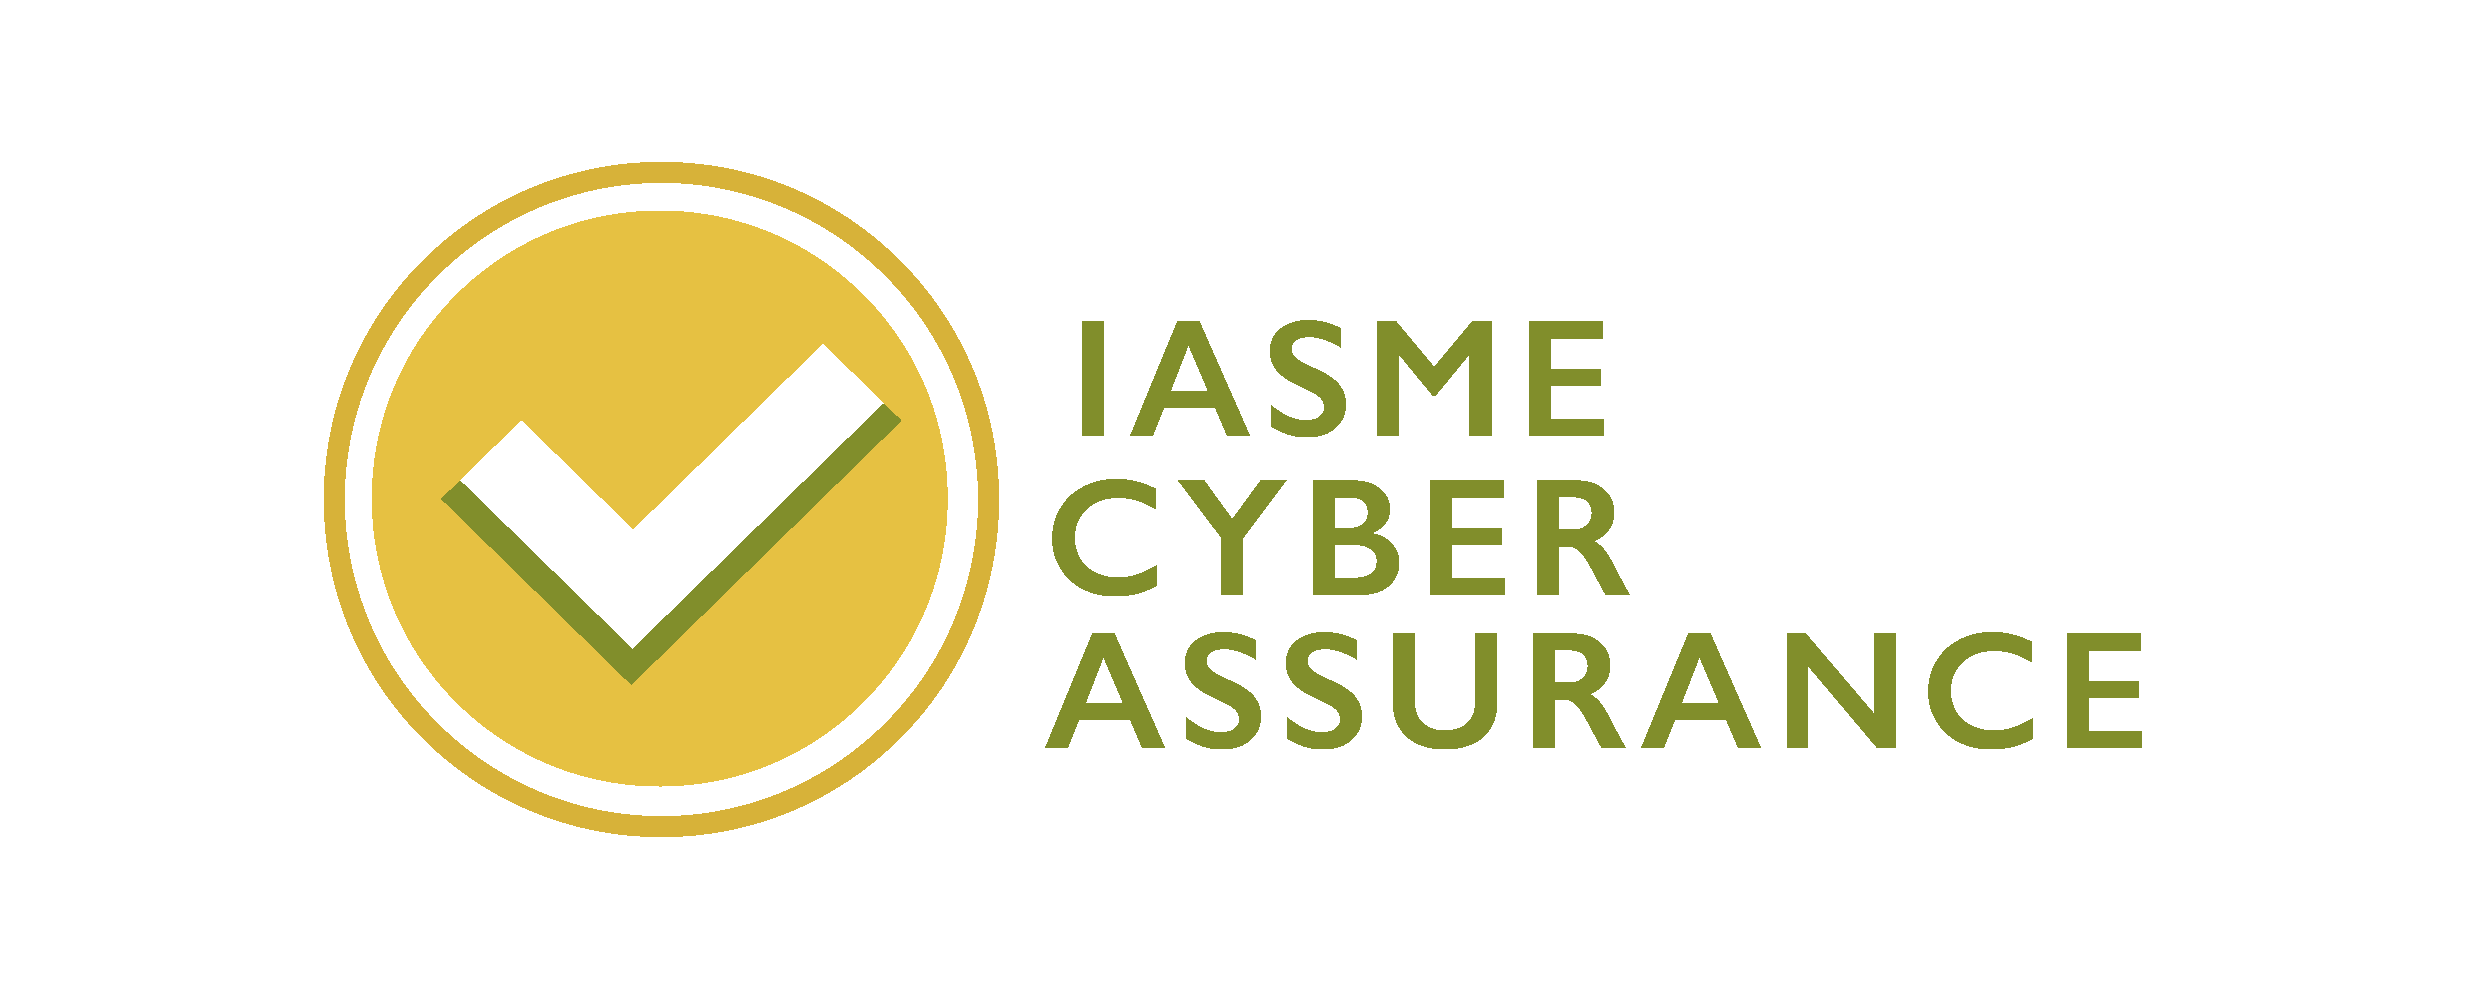 IASME Cyber Assurance Scheme Logo